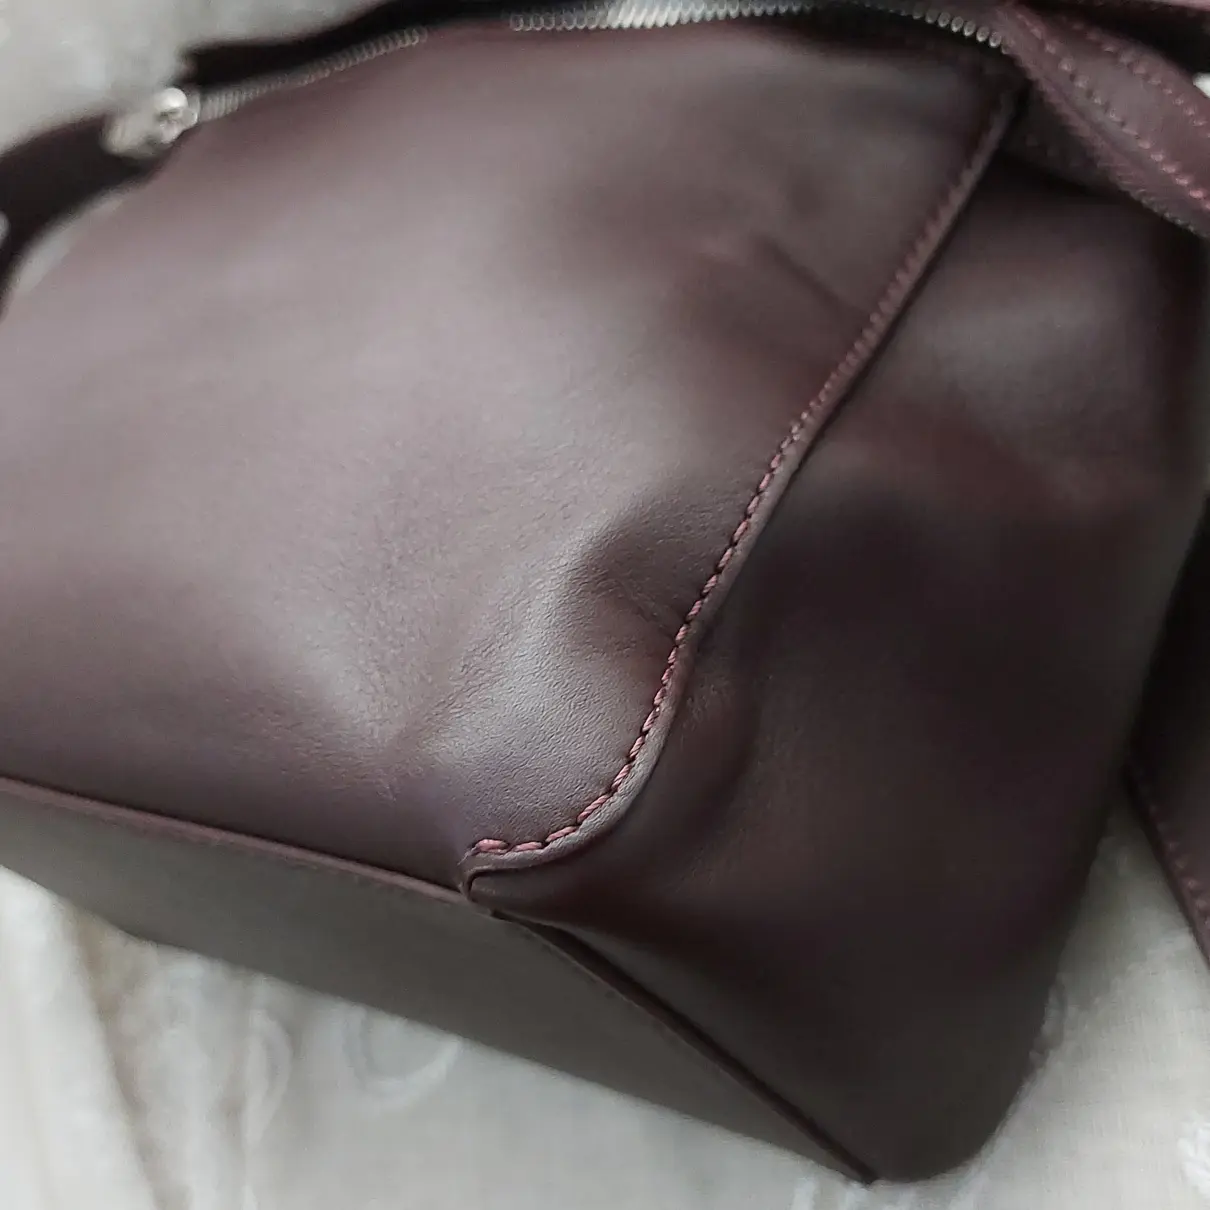 Bolt leather handbag Sophie Hulme